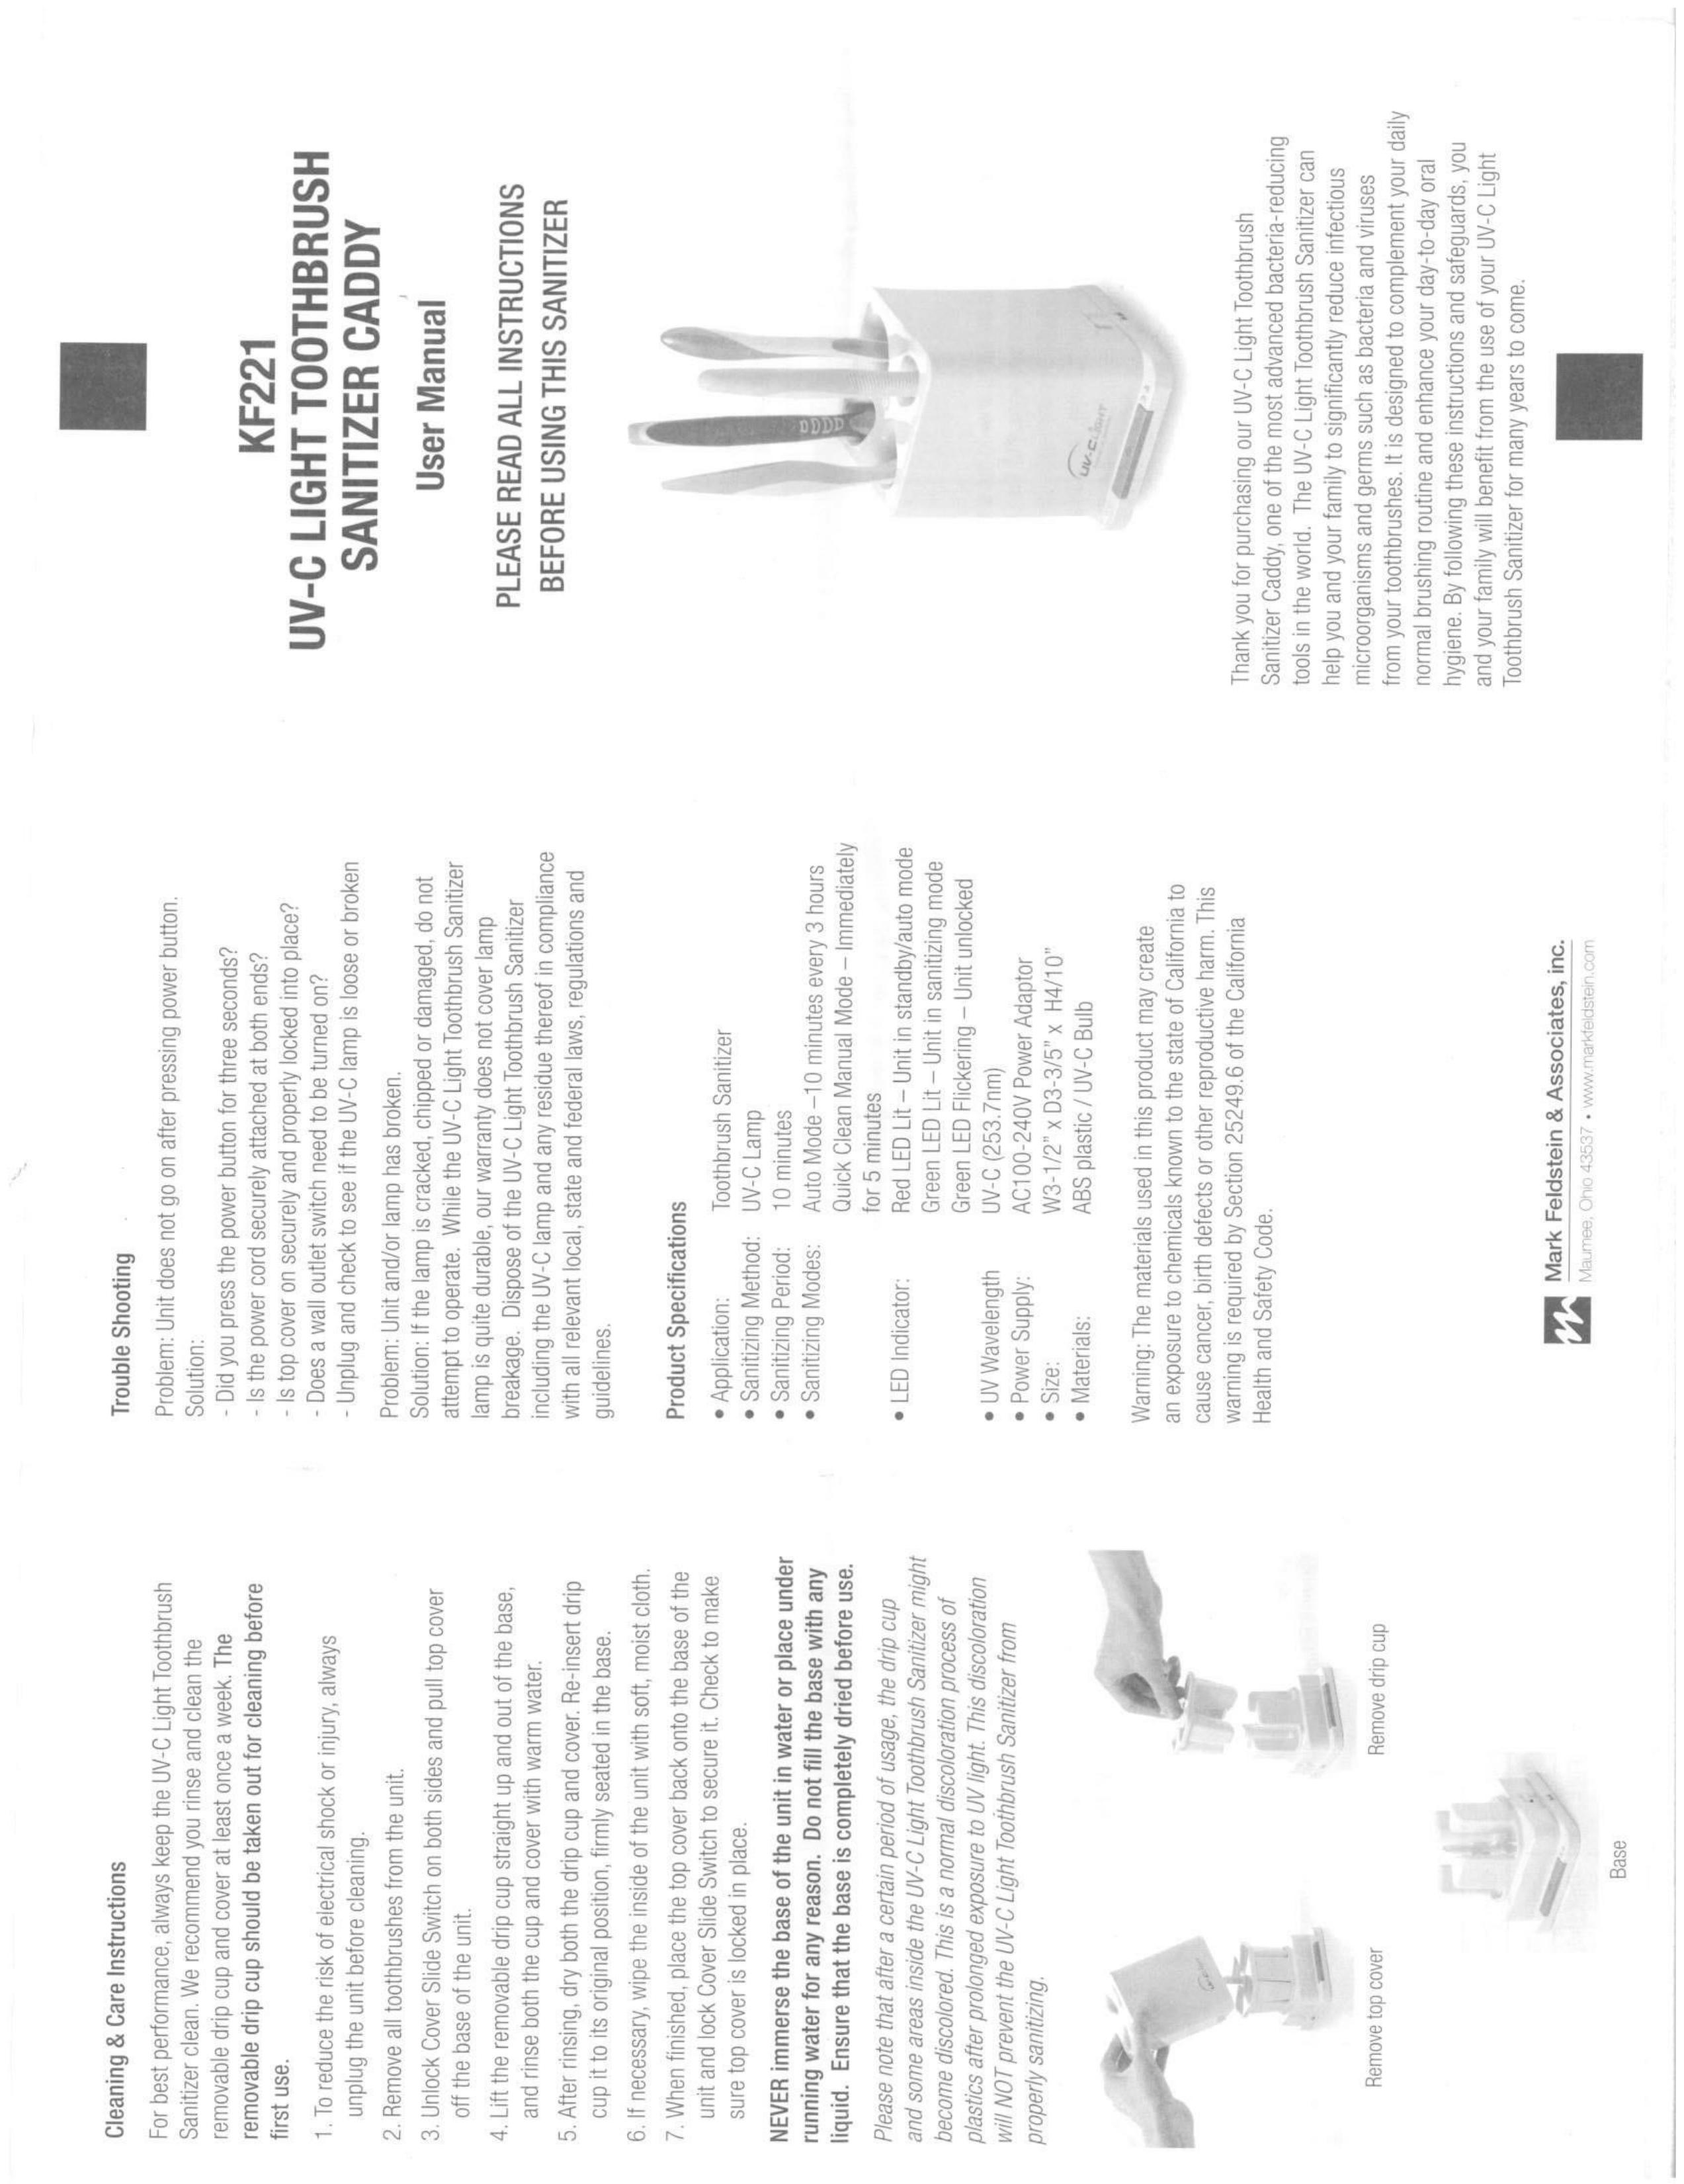 Mark Feldstein & Assoc KF221 Electric Toothbrush User Manual